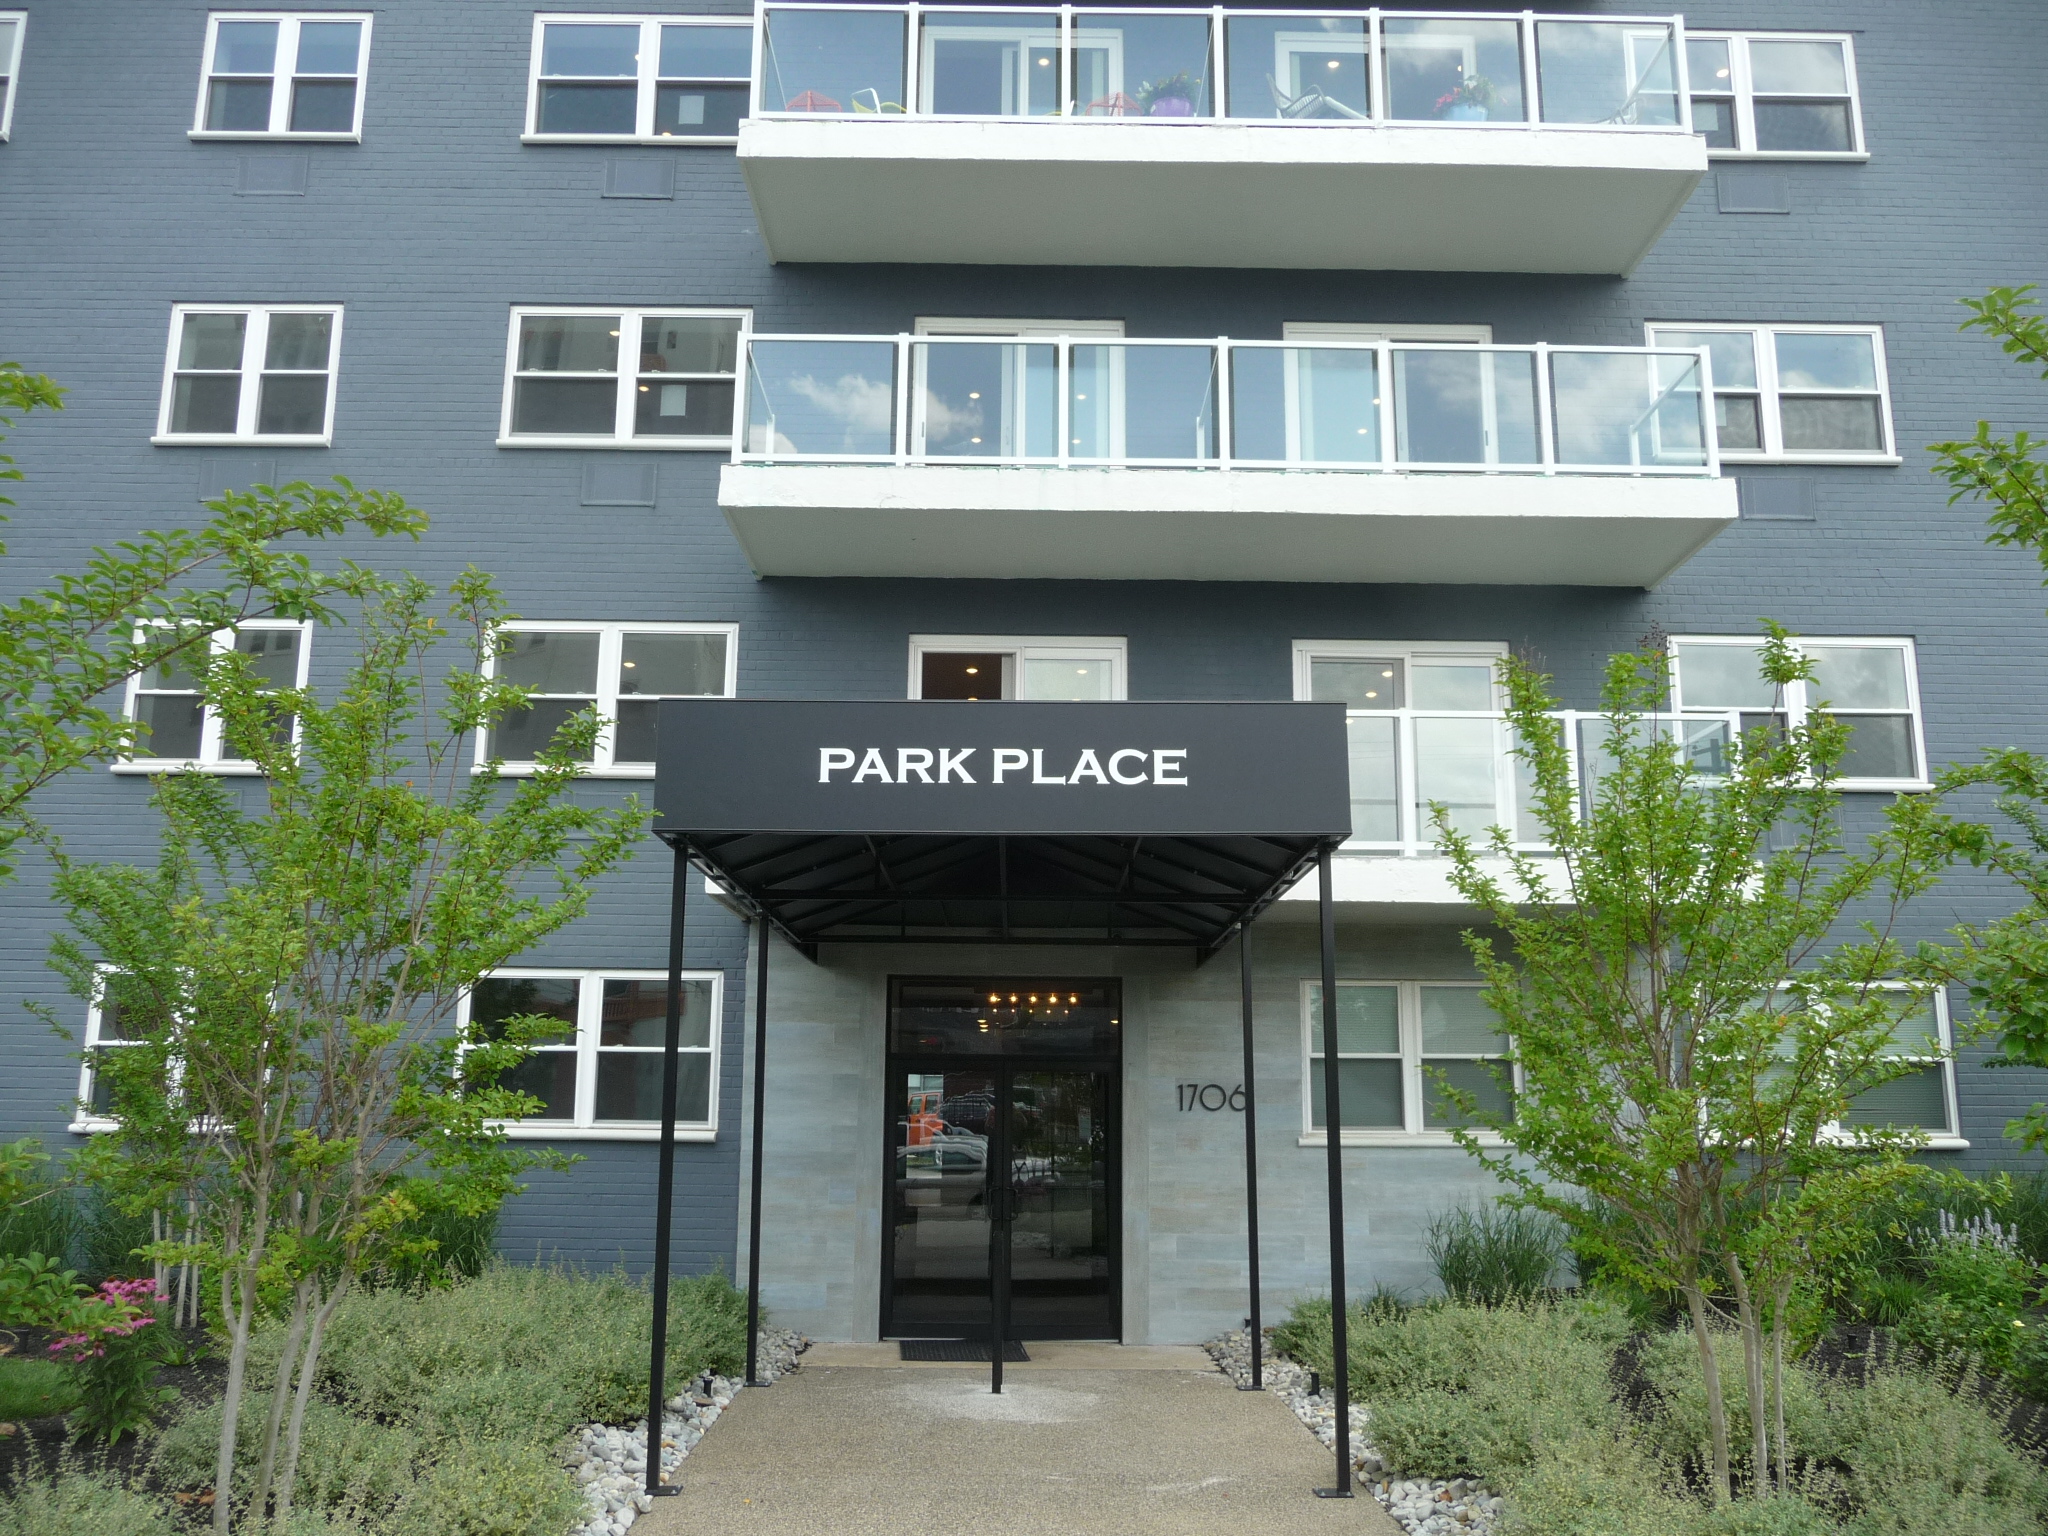 Park Place Condominium, Asbury Park NJ